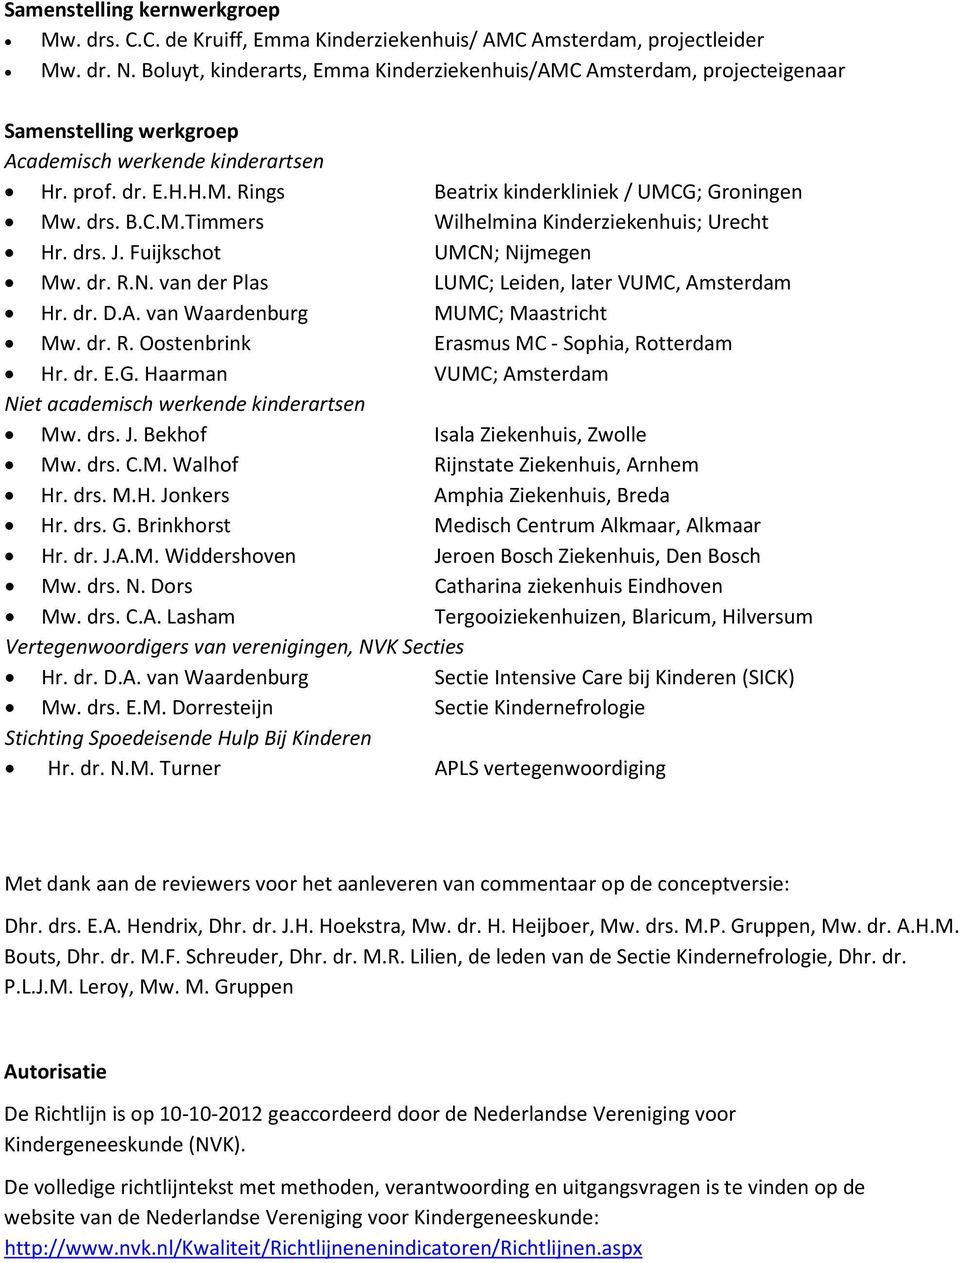 drs. B.C.M.Timmers Wilhelmina Kinderziekenhuis; Urecht Hr. drs. J. Fuijkschot UMCN; Nijmegen Mw. dr. R.N. van der Plas LUMC; Leiden, later VUMC, Amsterdam Hr. dr. D.A. van Waardenburg MUMC; Maastricht Mw.